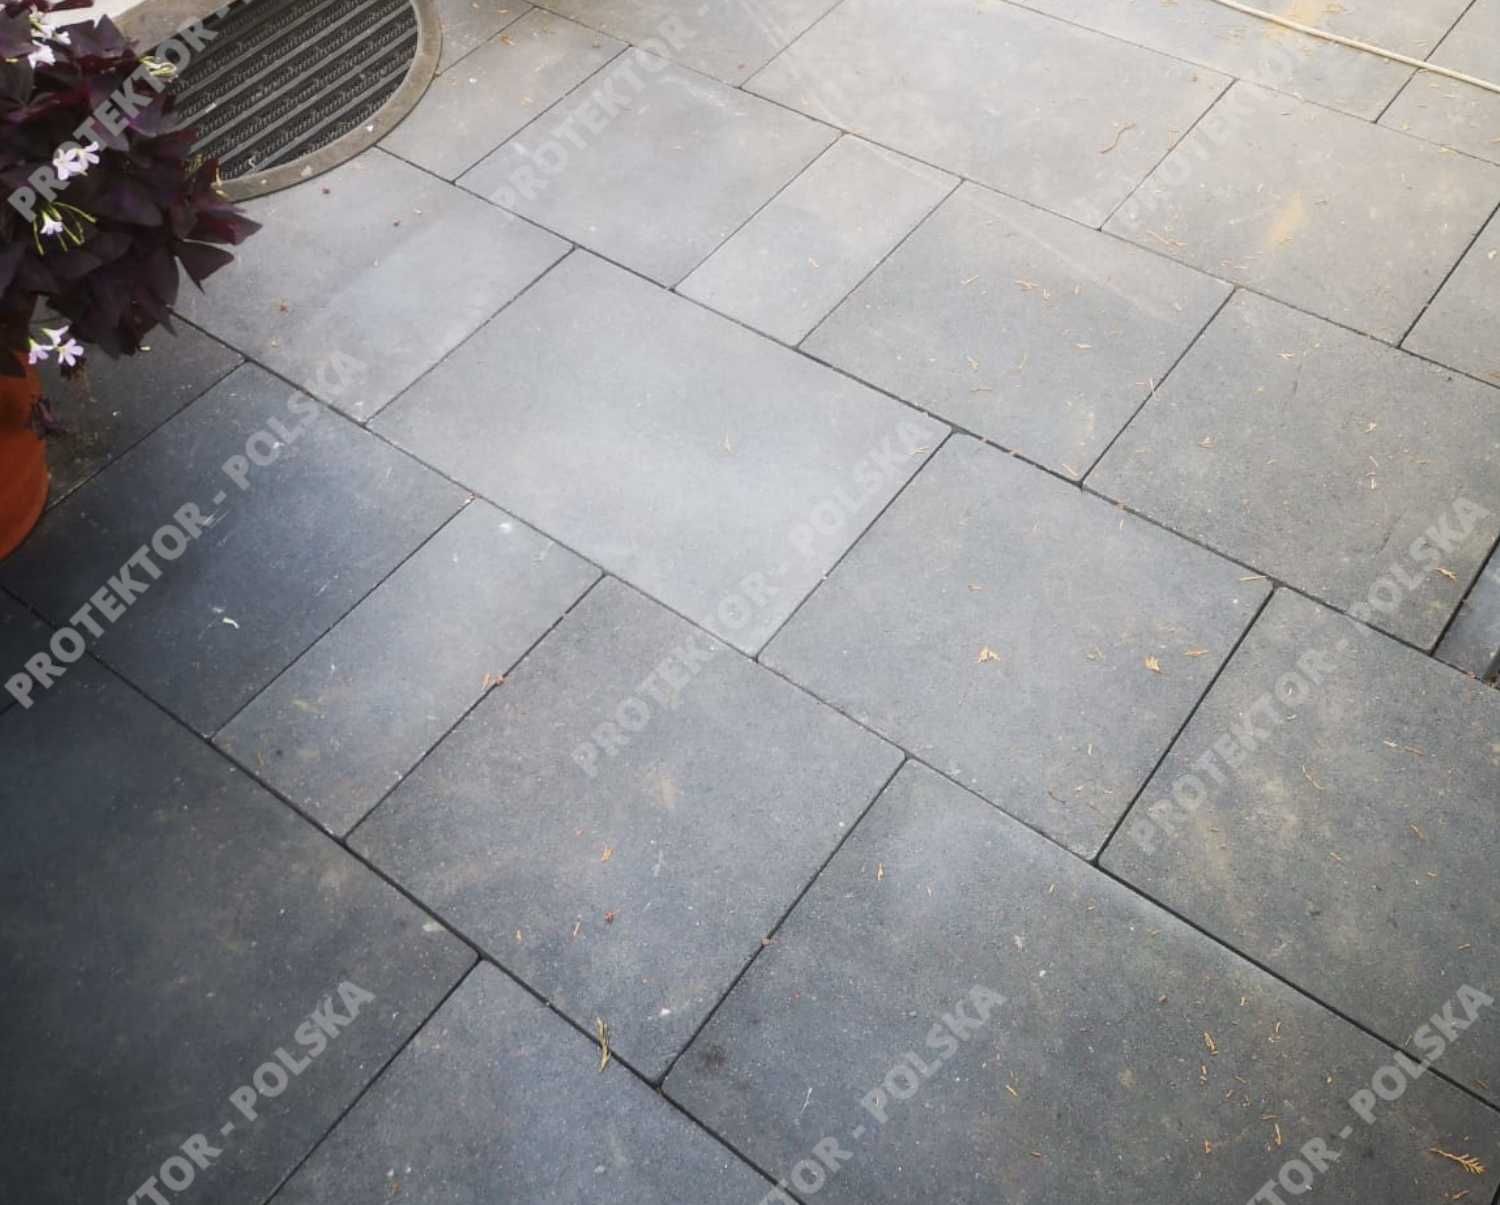 kostka brukowa LIGIO Bruk betonowa chodnik deptak płyta taras ganek